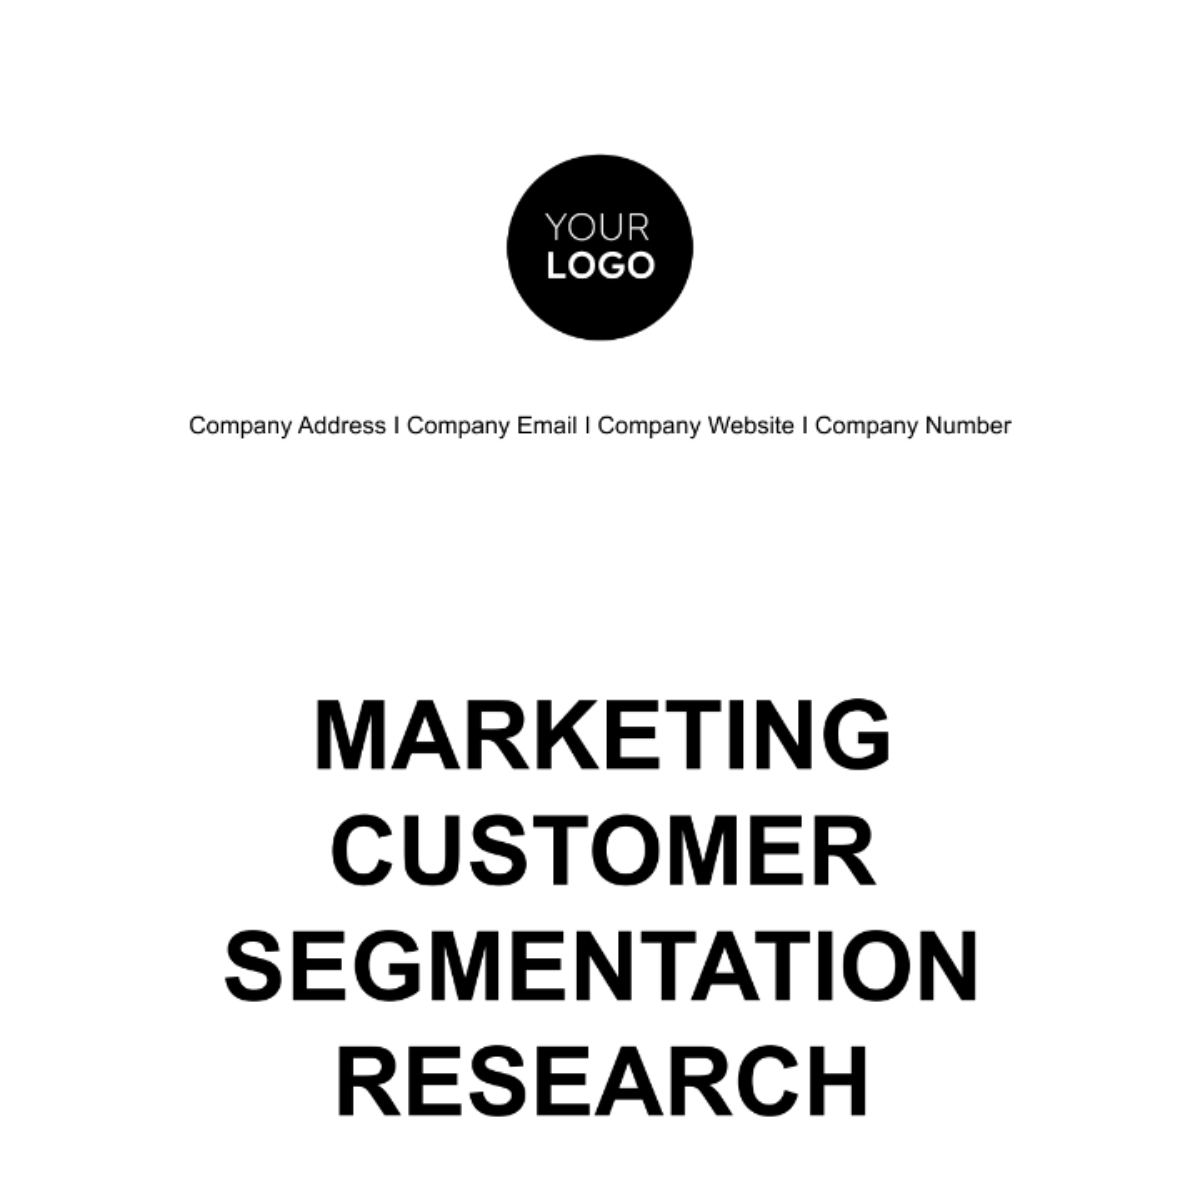 Marketing Customer Segmentation Research Template